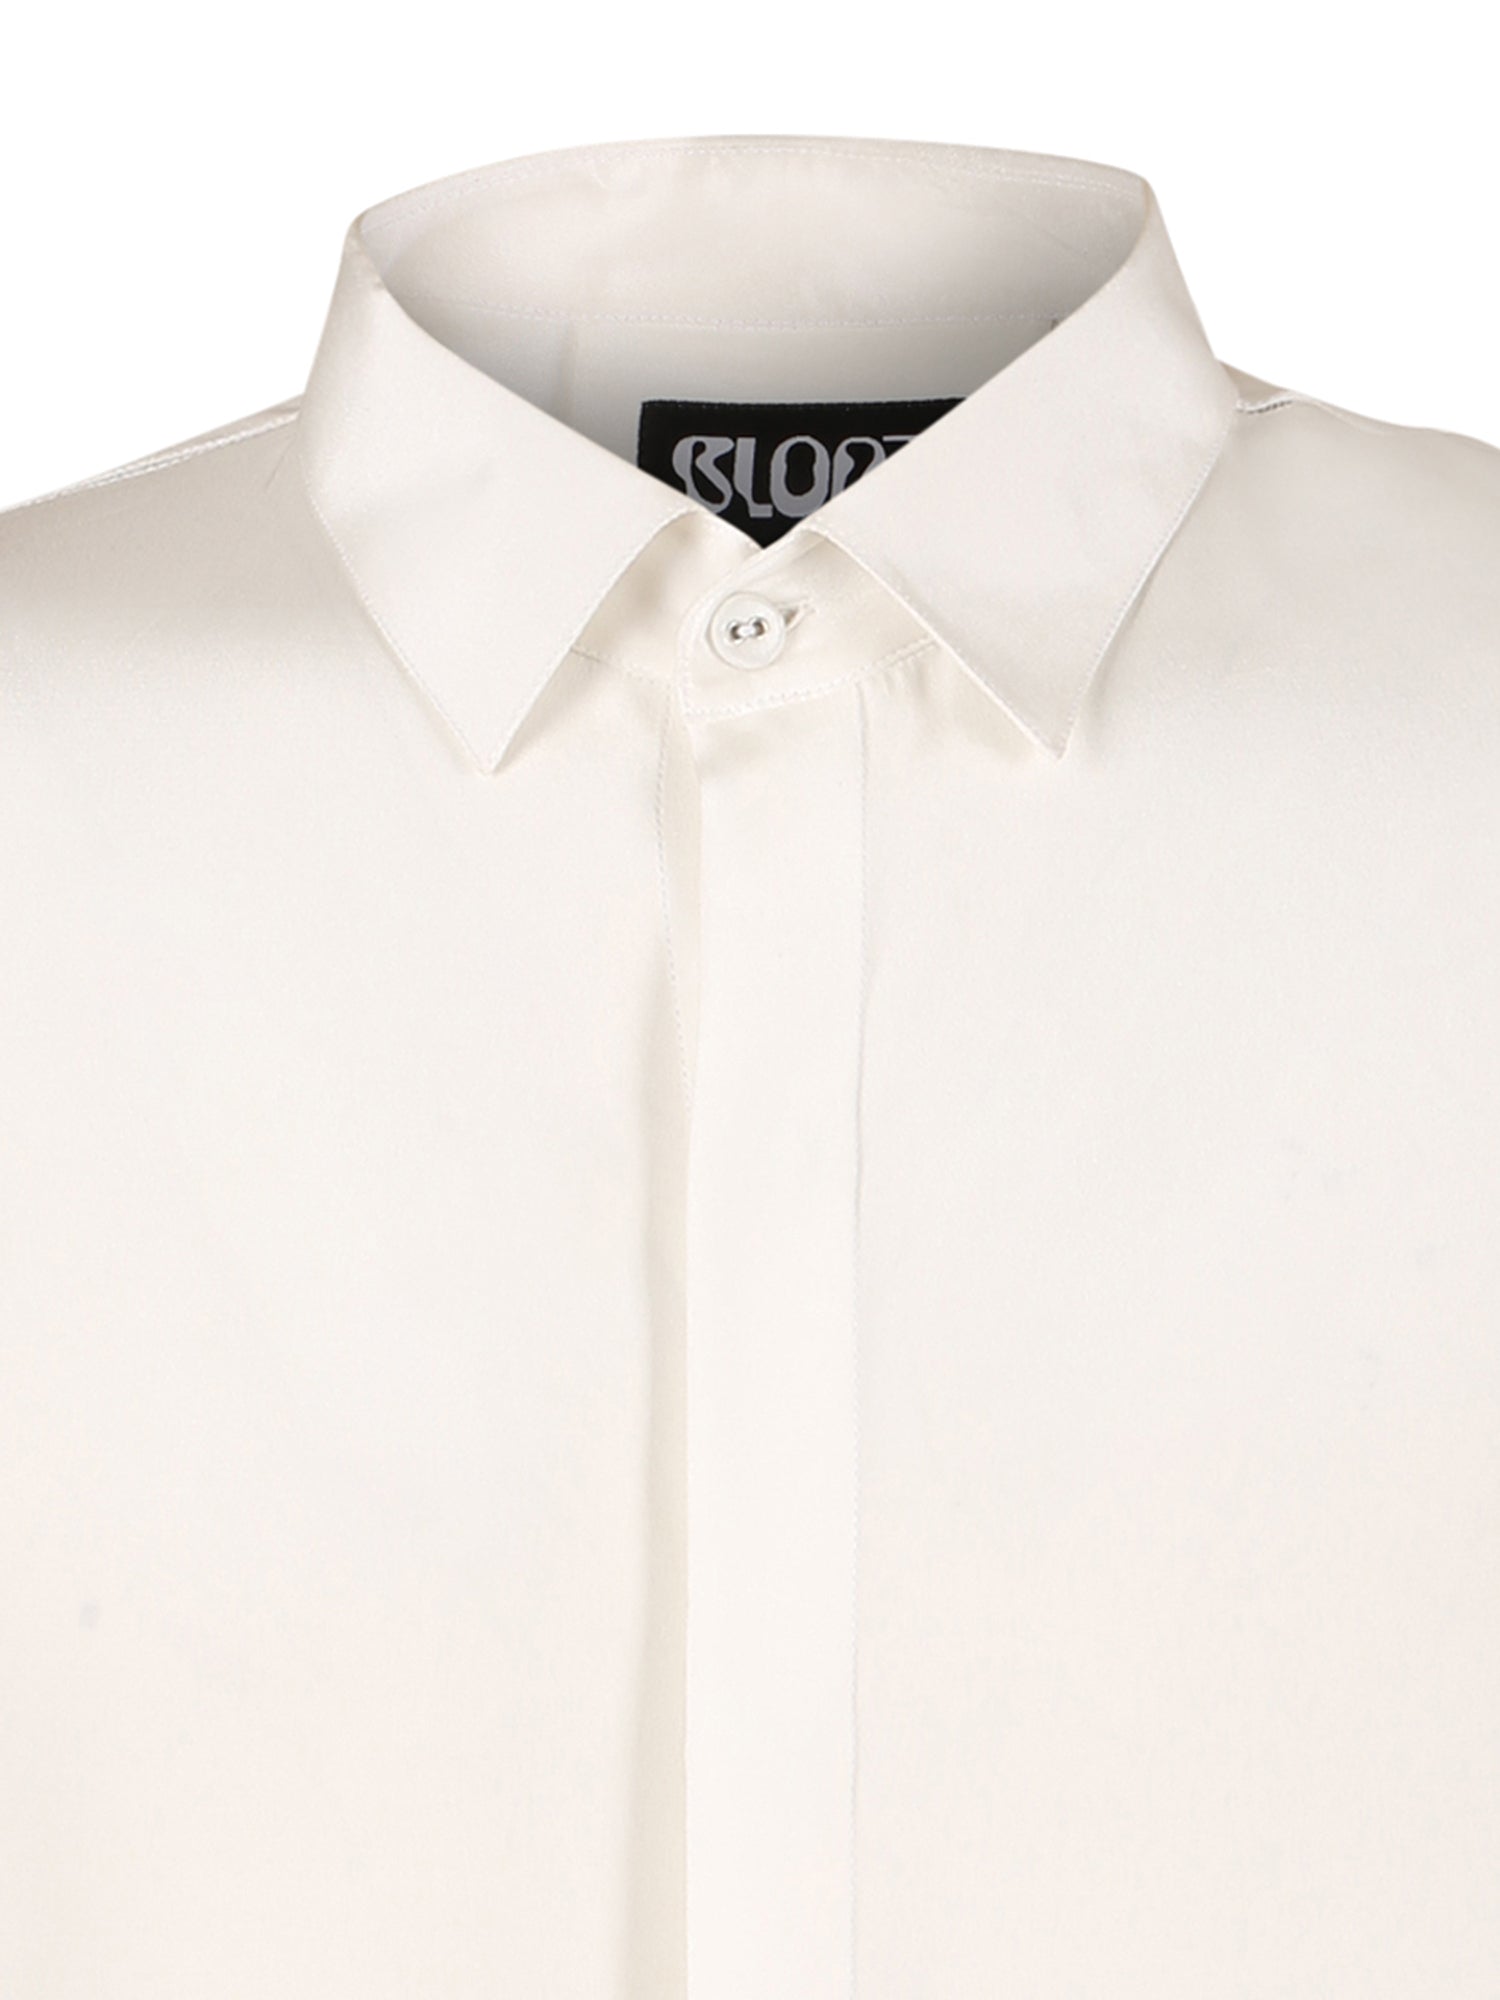 Drop shoulder white crepe shirt